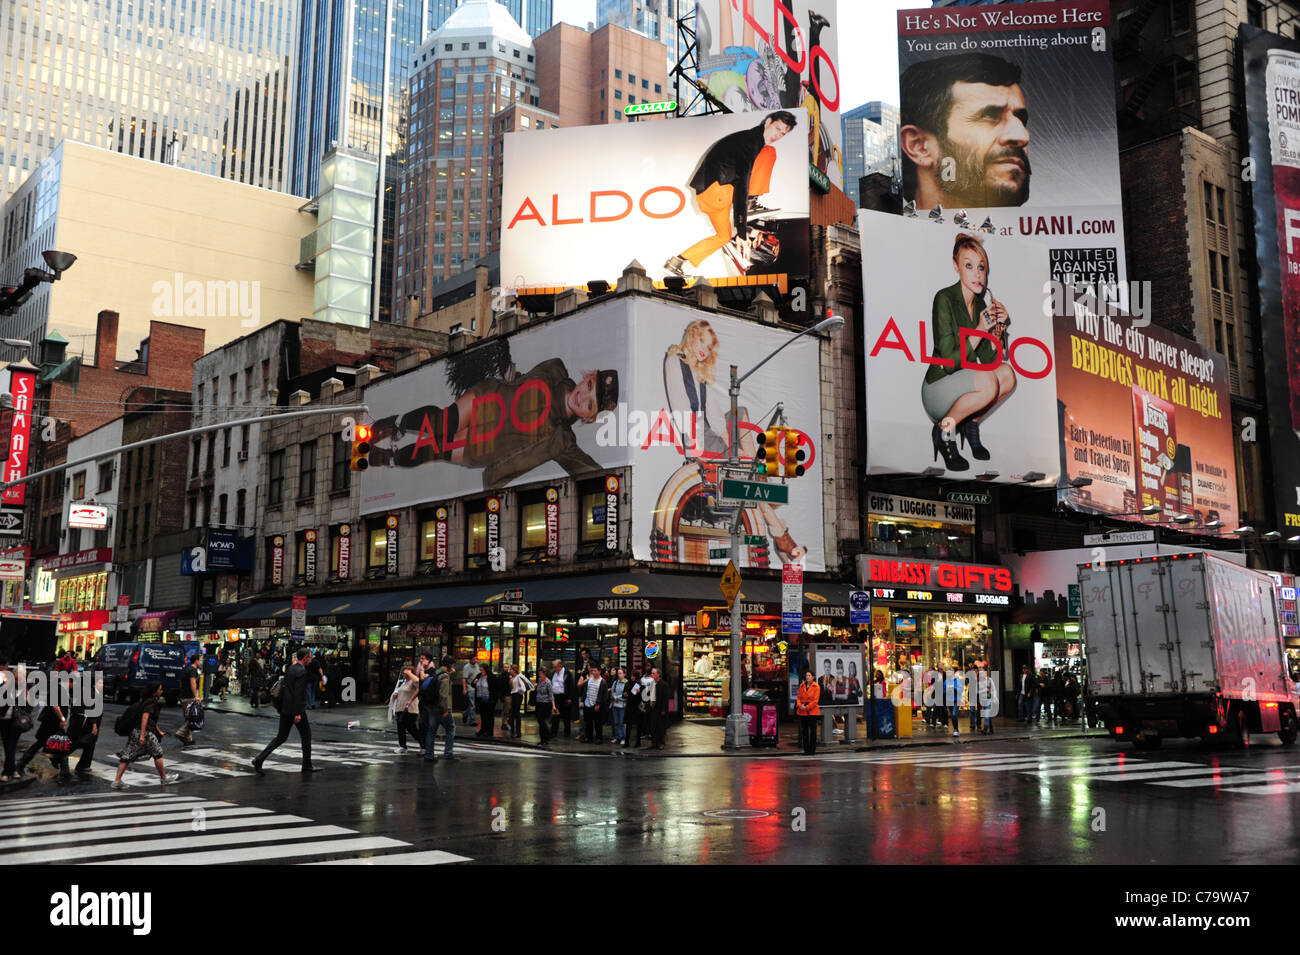 Rain view neon lights, illuminated shops, people, billboard advertisement, corner 7th Avenue West 48th Street, New York City, US Stock Photo